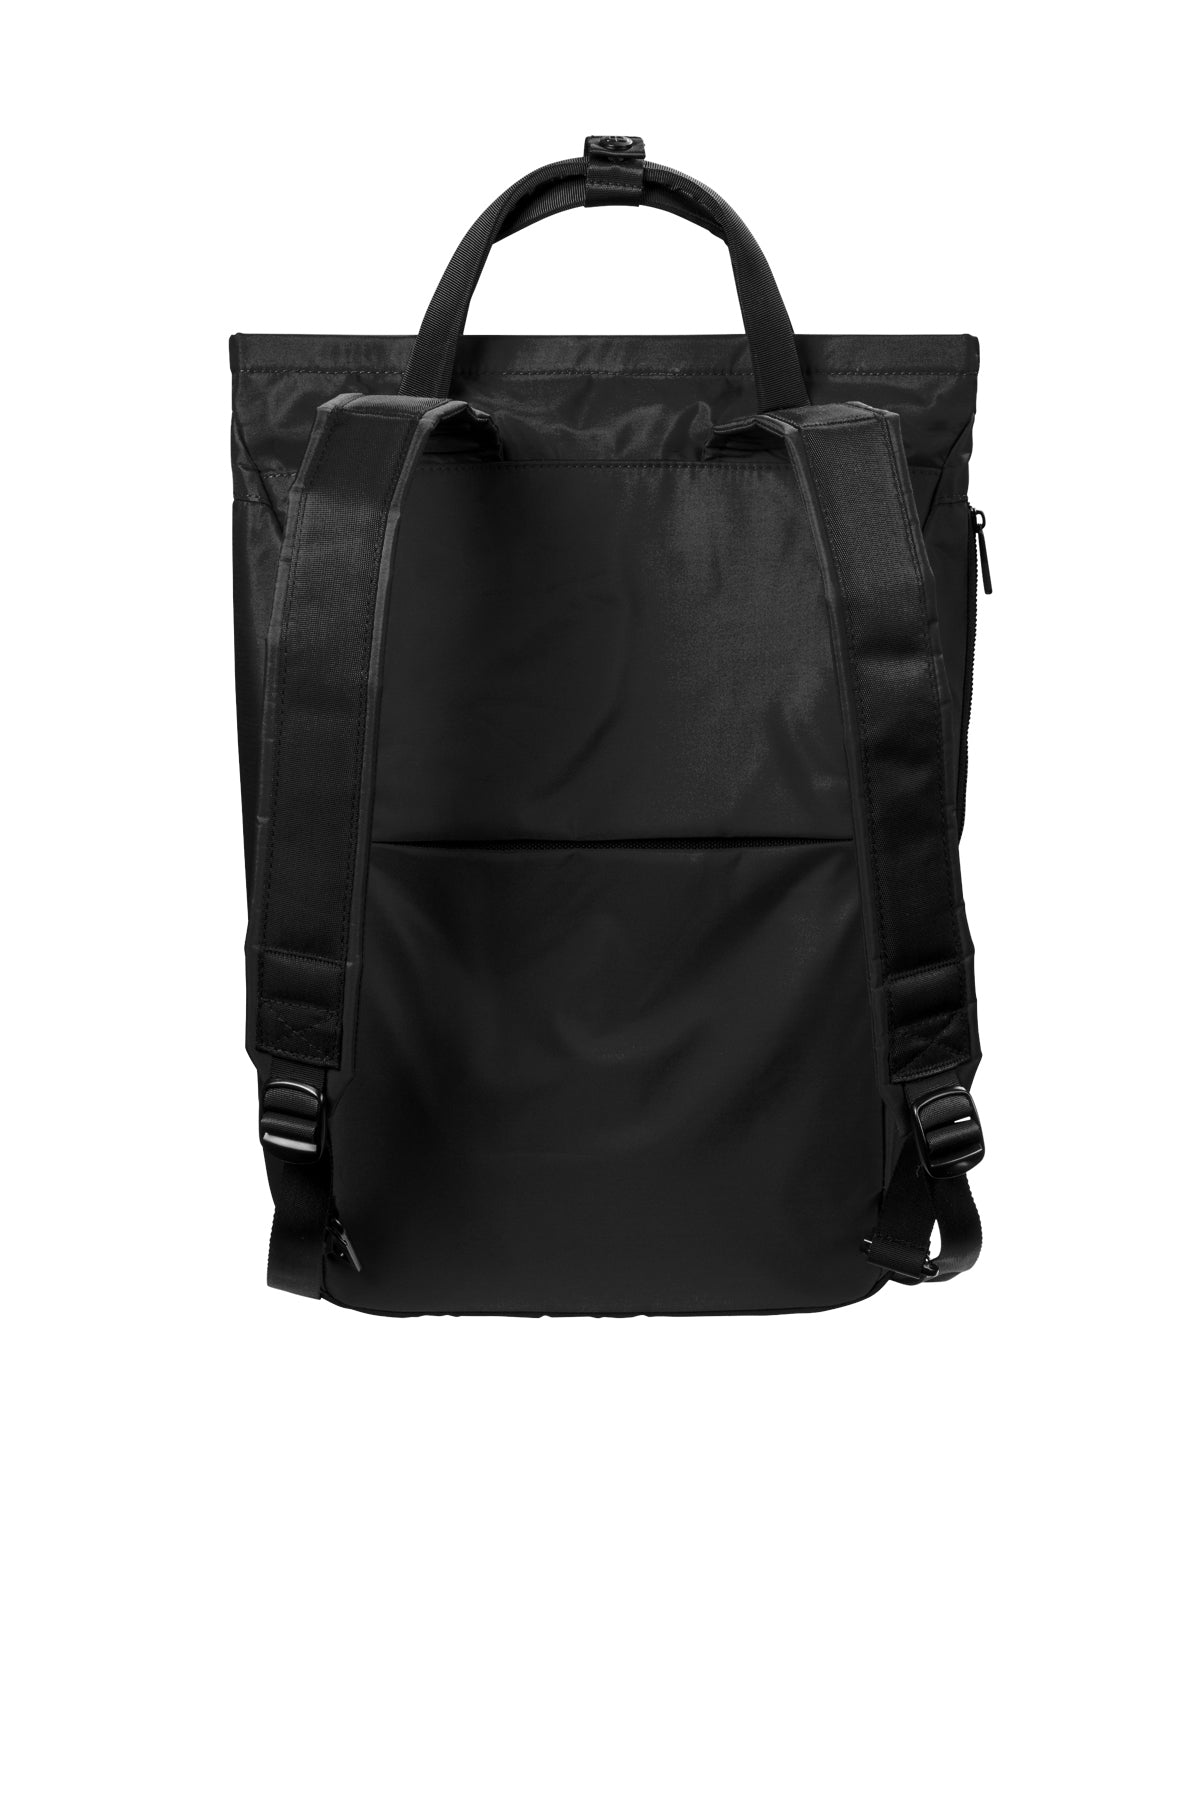 OGIO Evolution Custom Convertible Backpacks, Blacktop